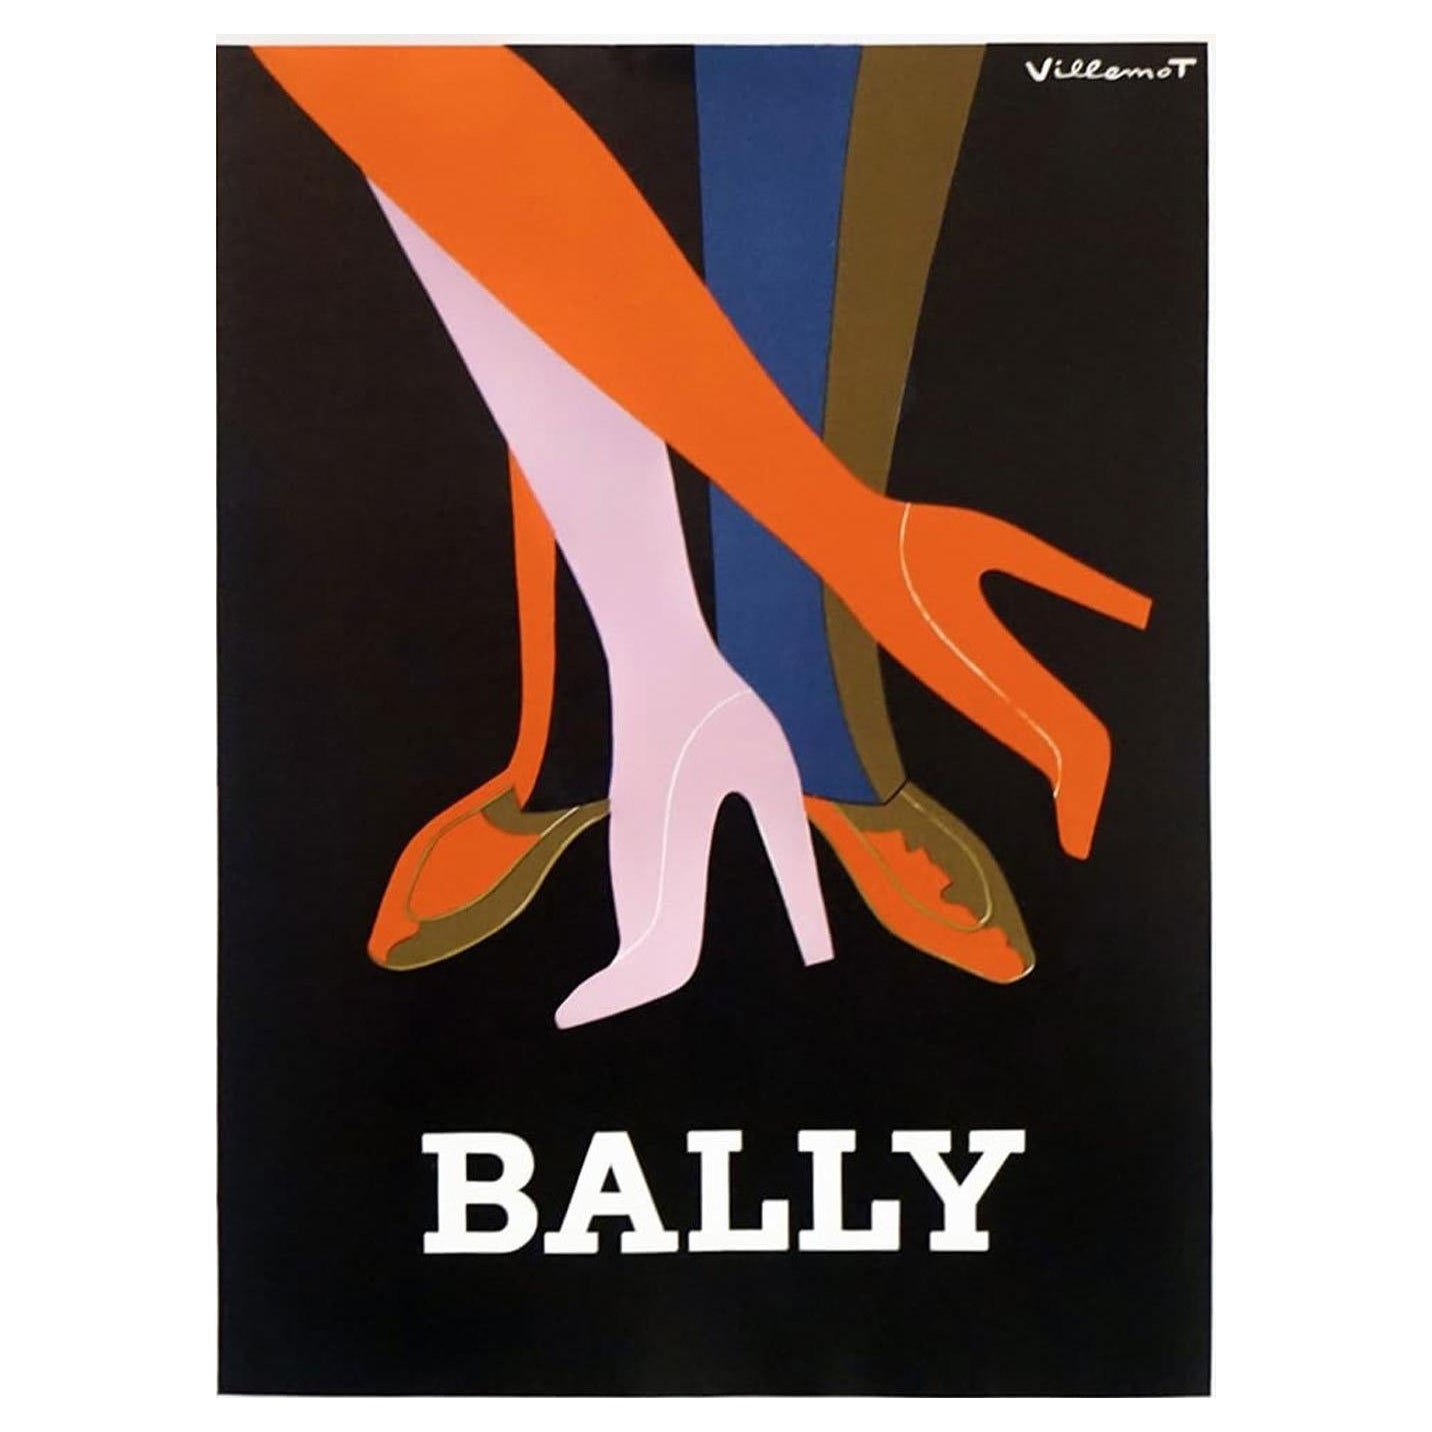 1979 Bally, Shoes Original Vintage Poster For Sale